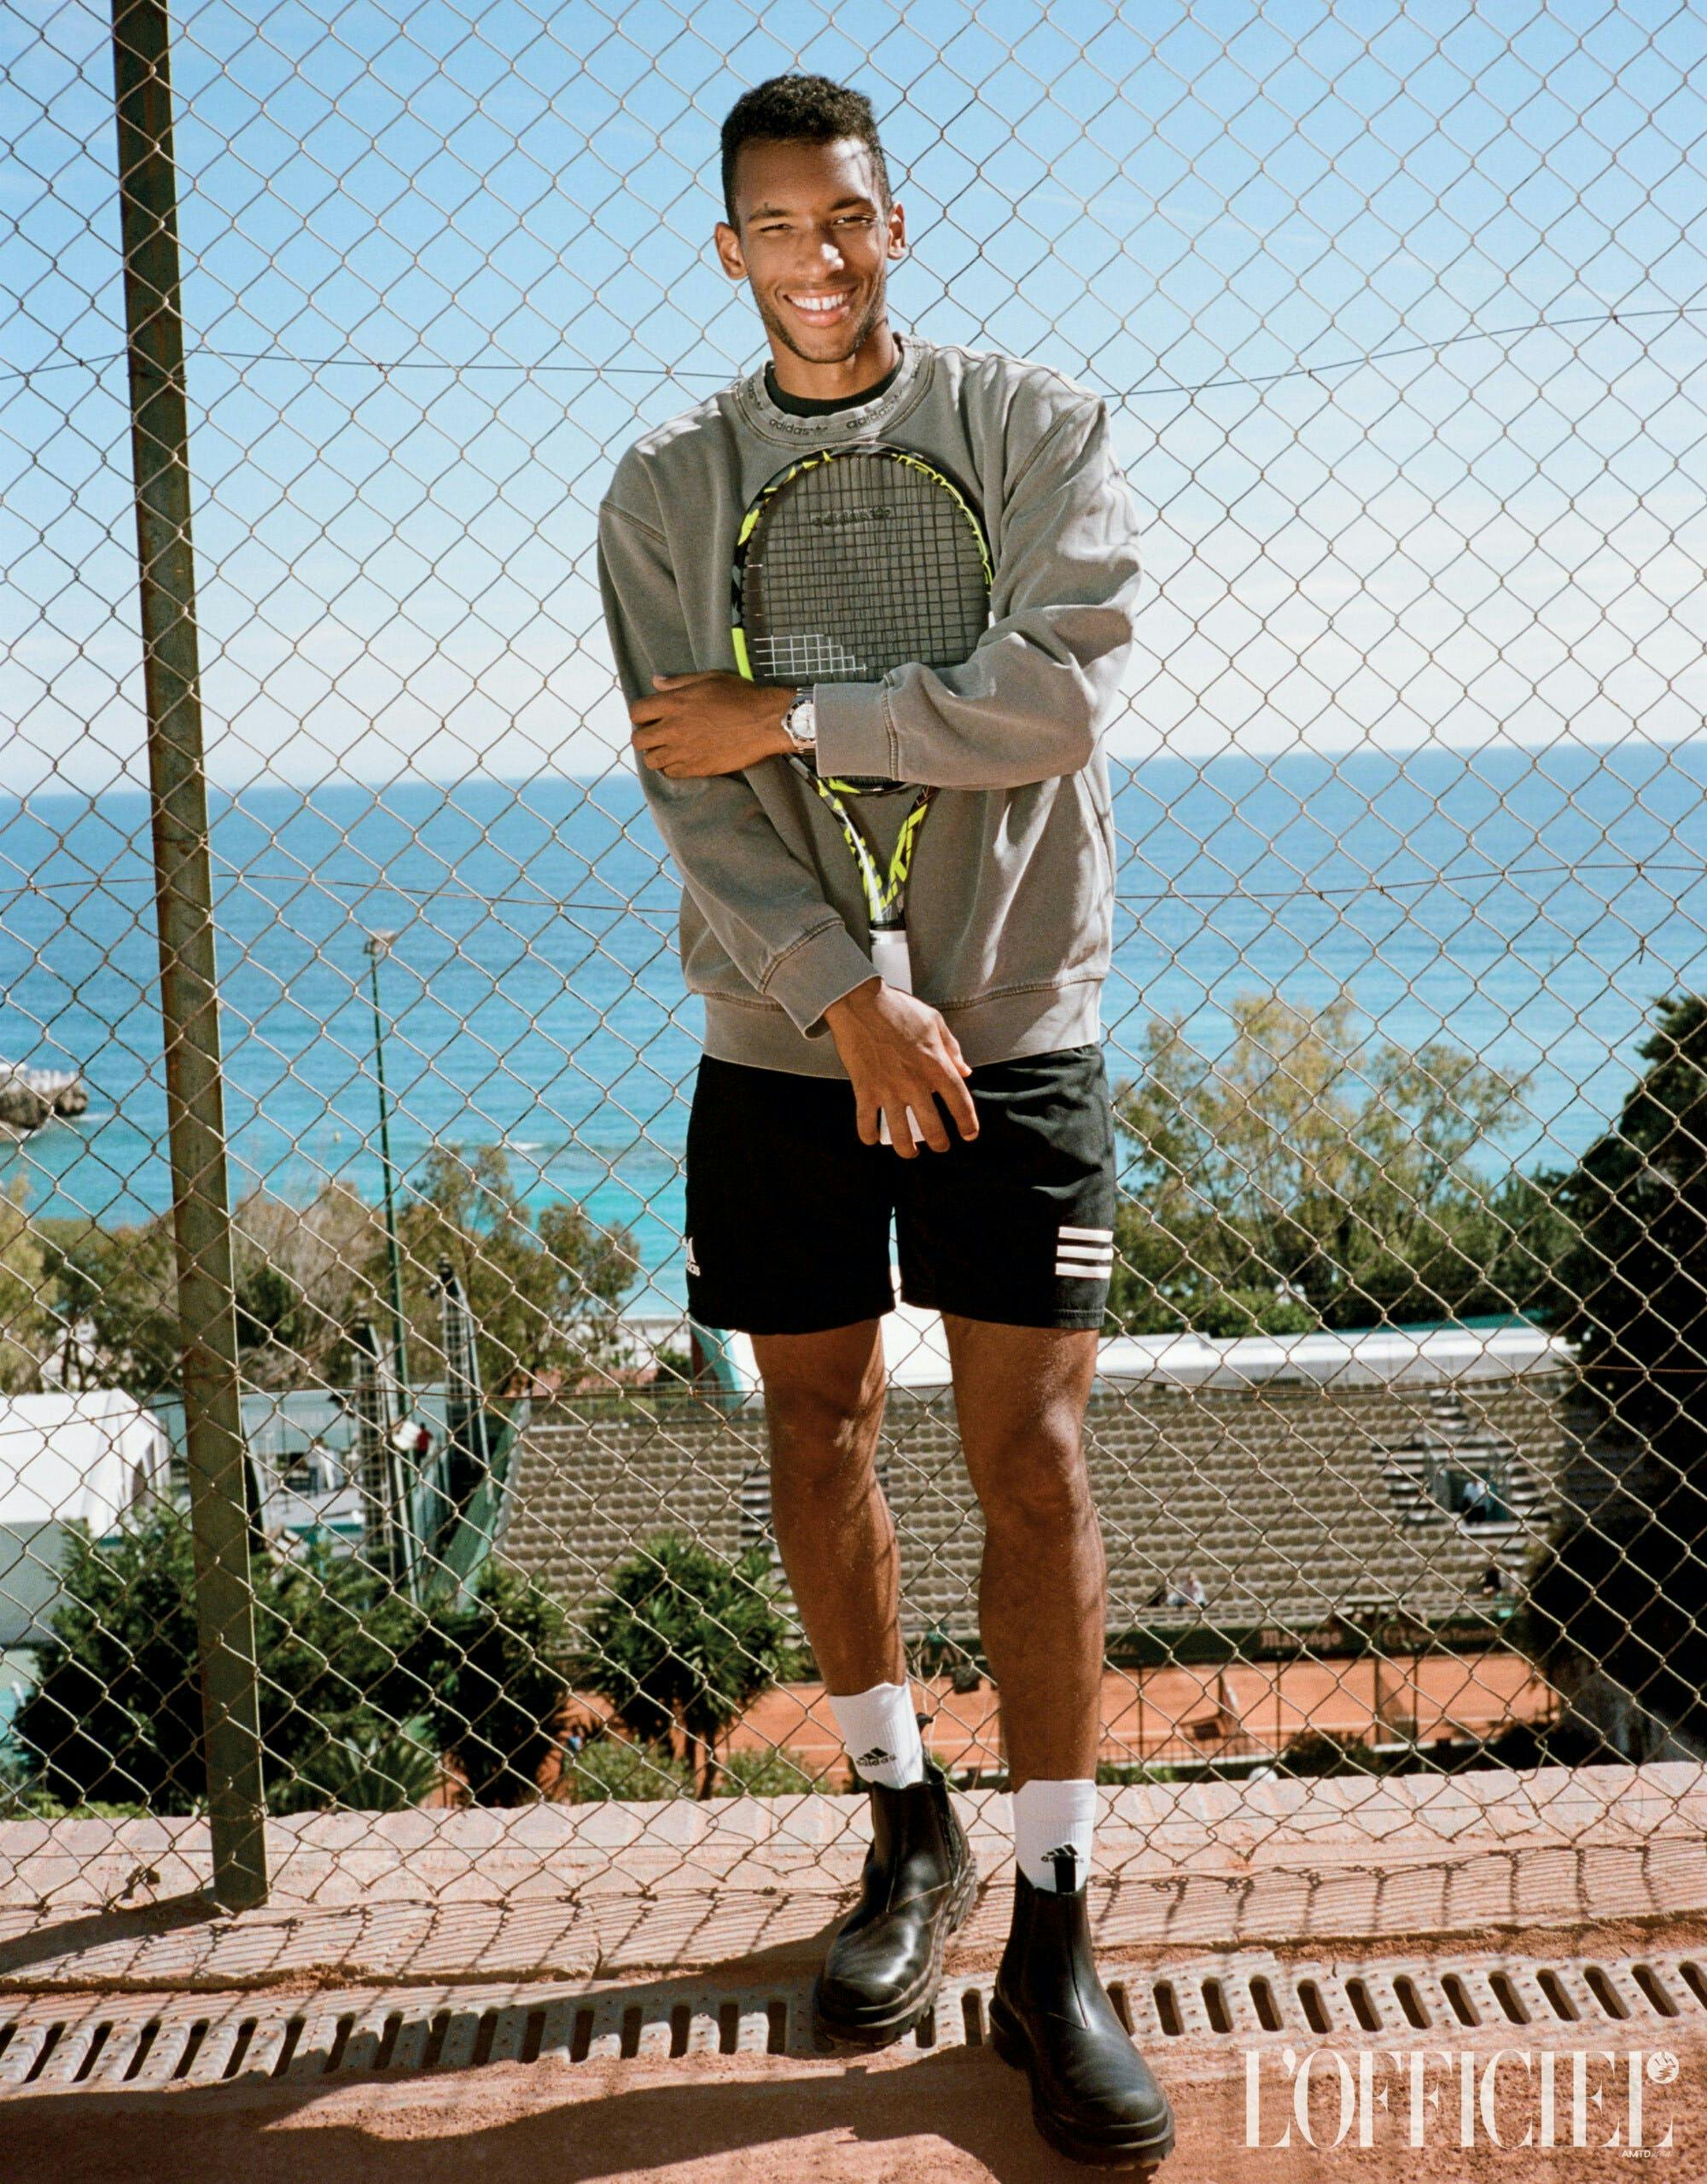 racket sport tennis tennis racket clothing shorts footwear shoe person sneaker